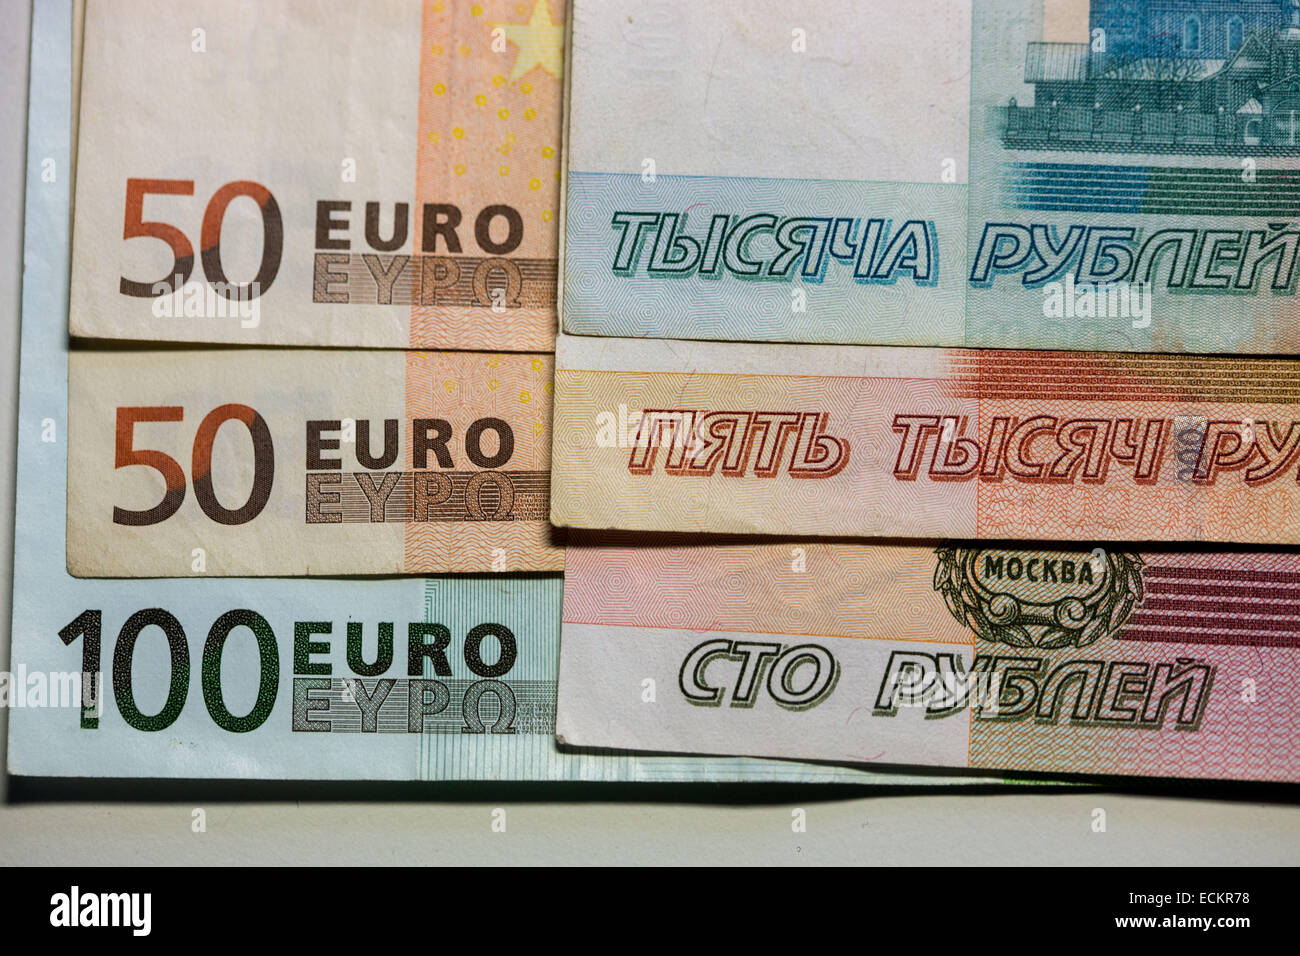 5 Тысяч евро. 1000 Евро в рублях. 90 Евро в рублях. 100 Тыс евро в рублях.